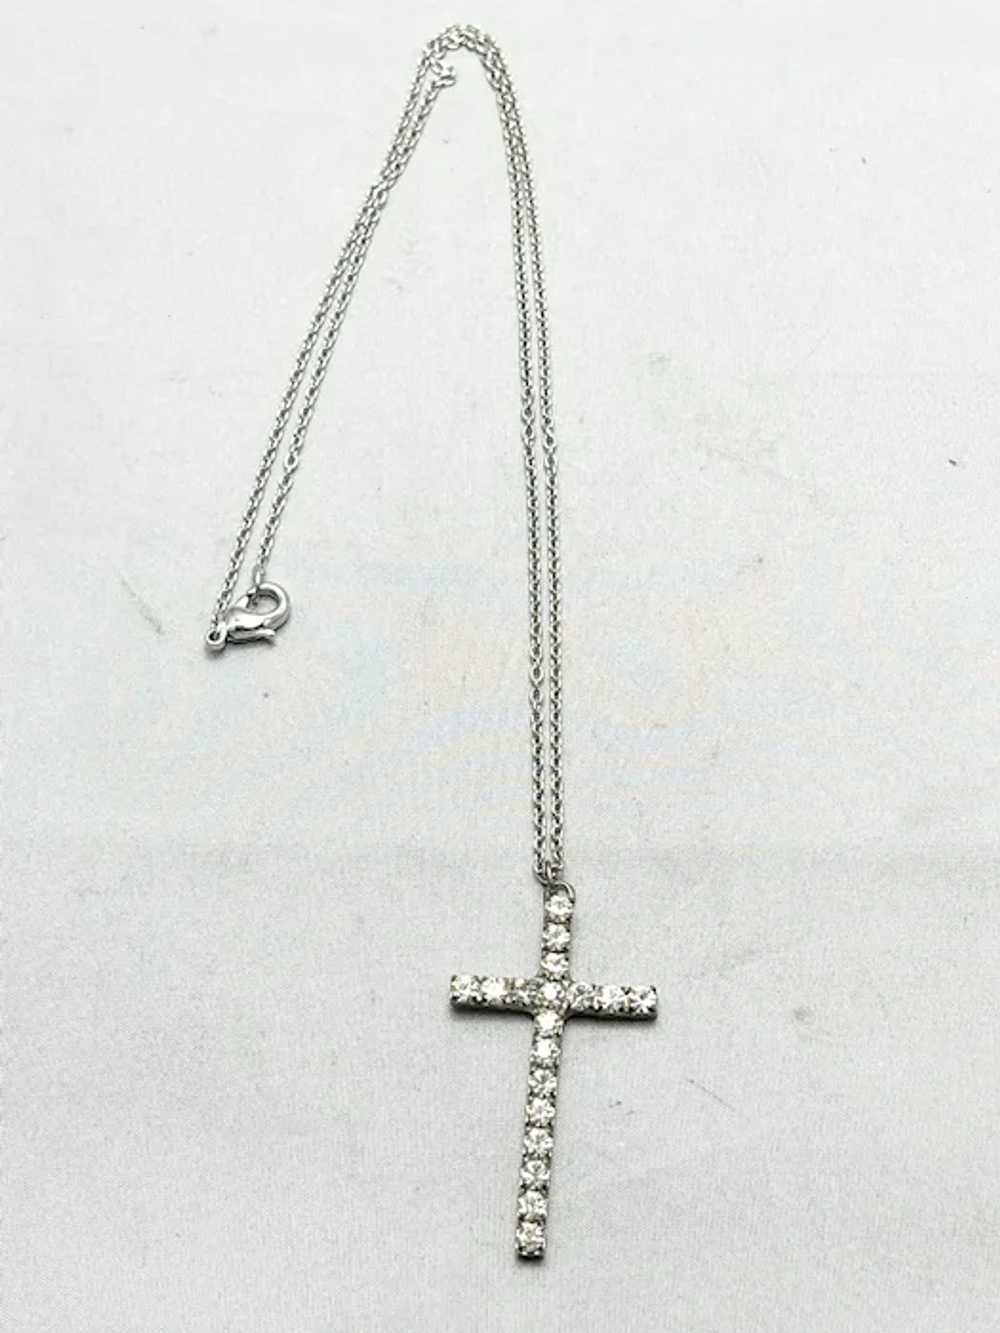 Vintage Rhinestone Cross Chain Necklace - image 2